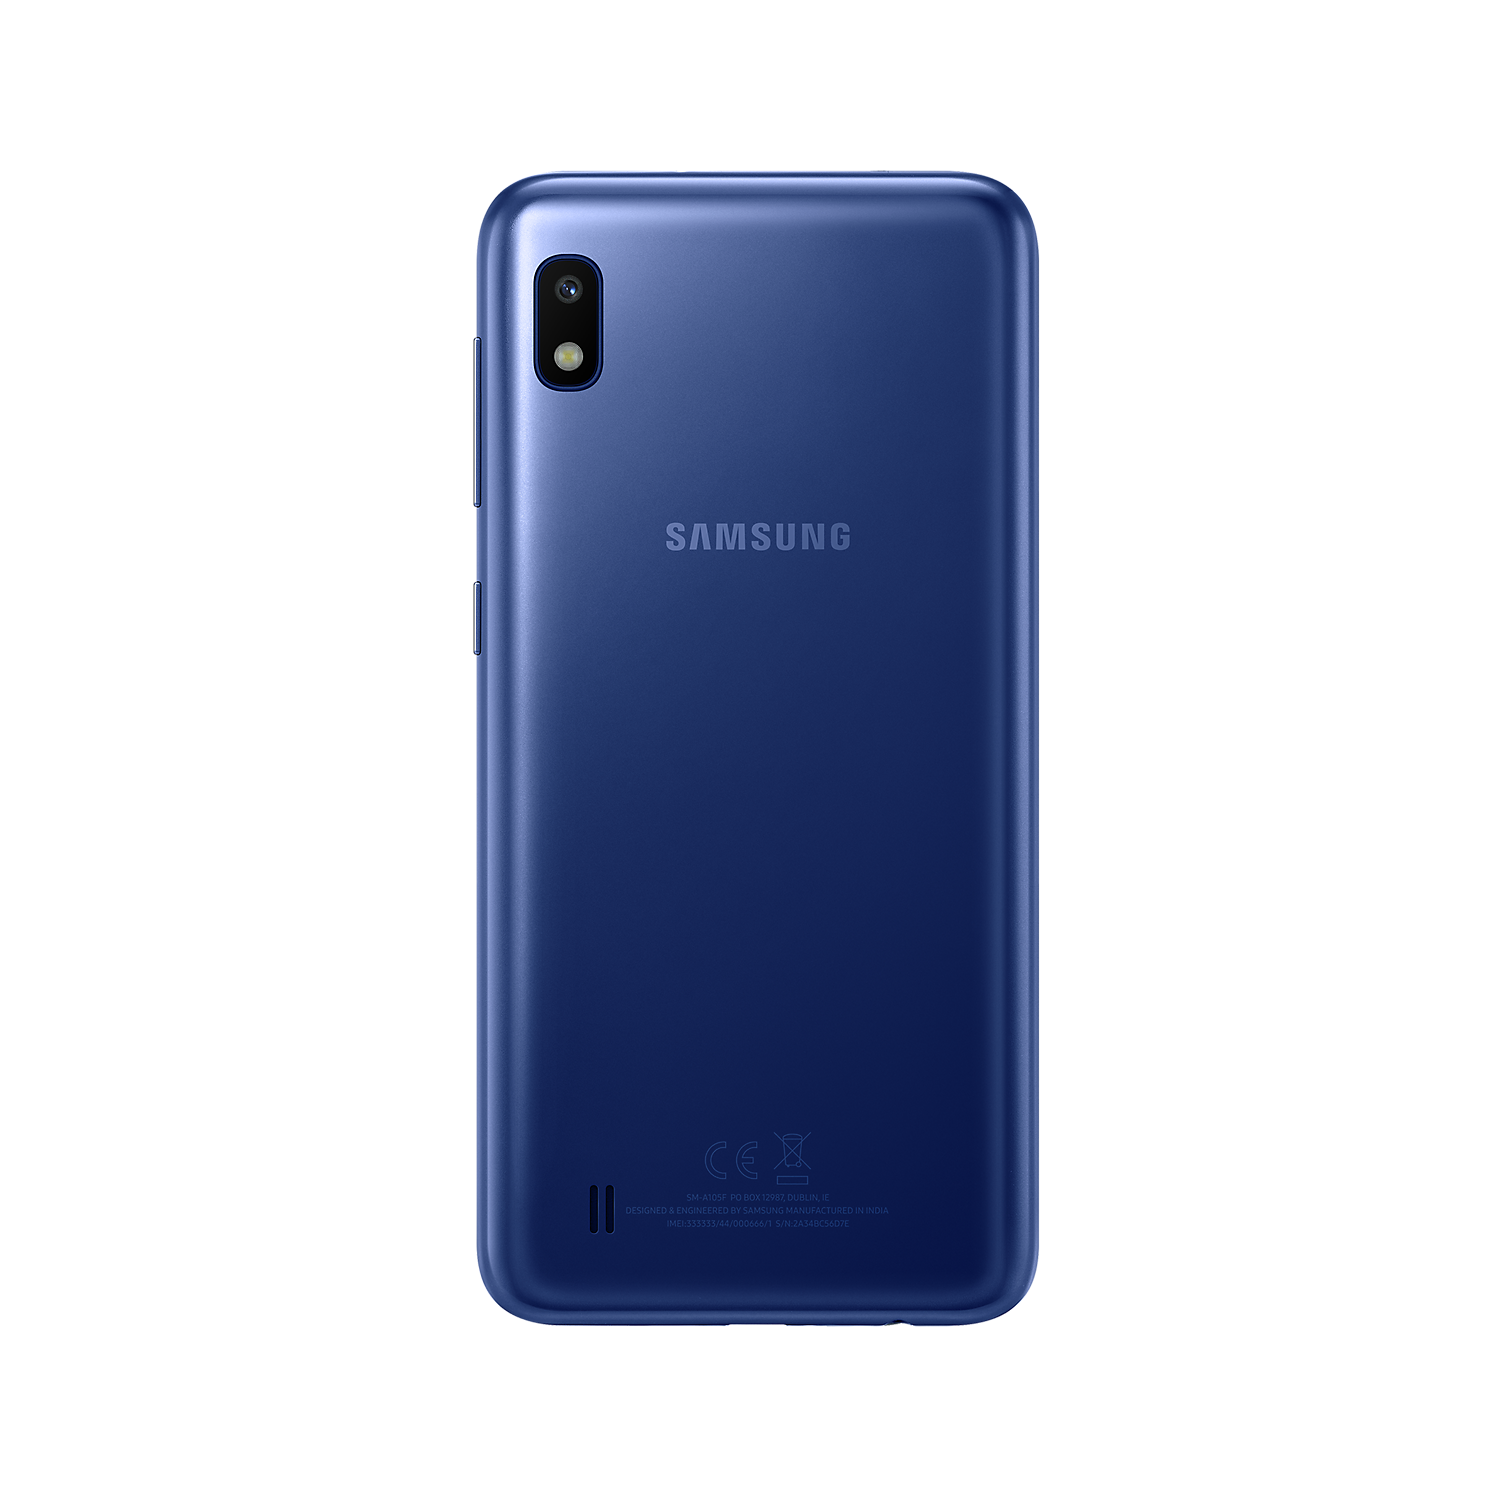 Hen excelleren belegd broodje Samsung Galaxy A10 Blue 6.2" 32GB 4G Dual SIM Unlocked & SIM Free - Laptops  Direct